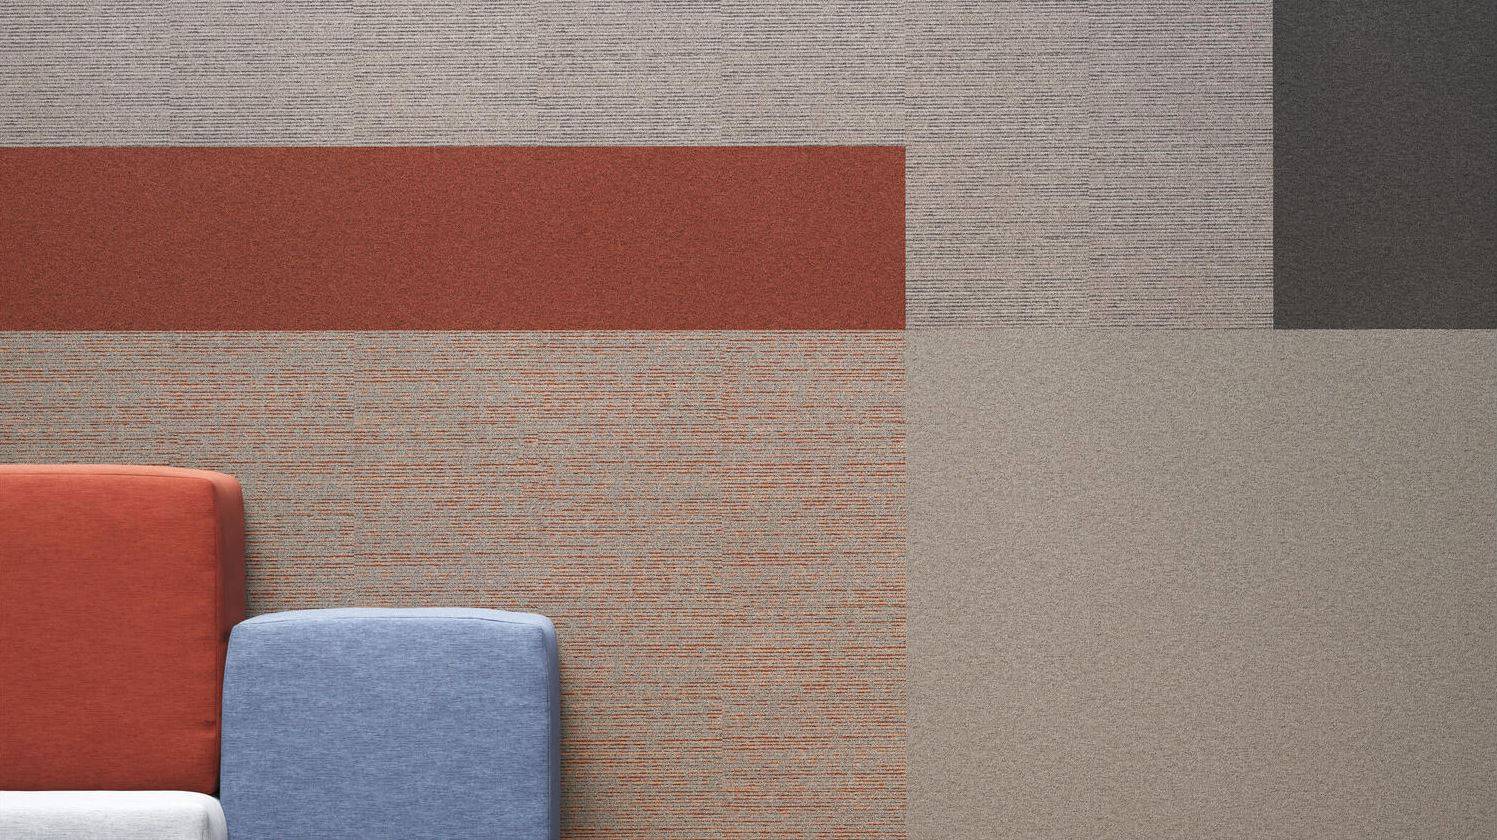 Desso Essence Pure - Carpet Tile